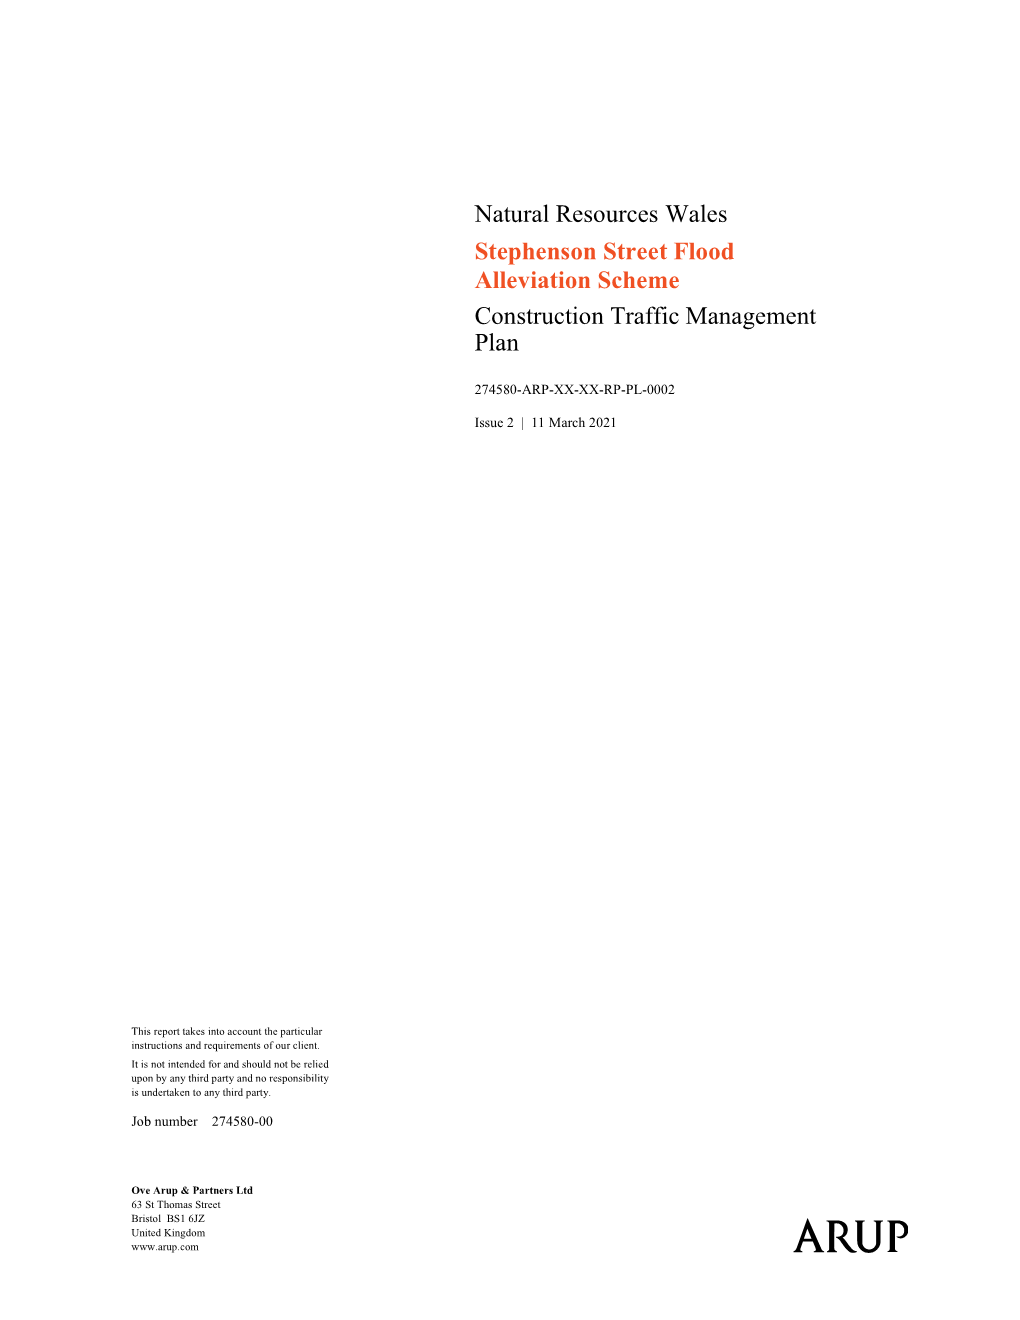 Natural Resources Wales Stephenson Street Flood Alleviation Scheme Construction Traffic Management Plan